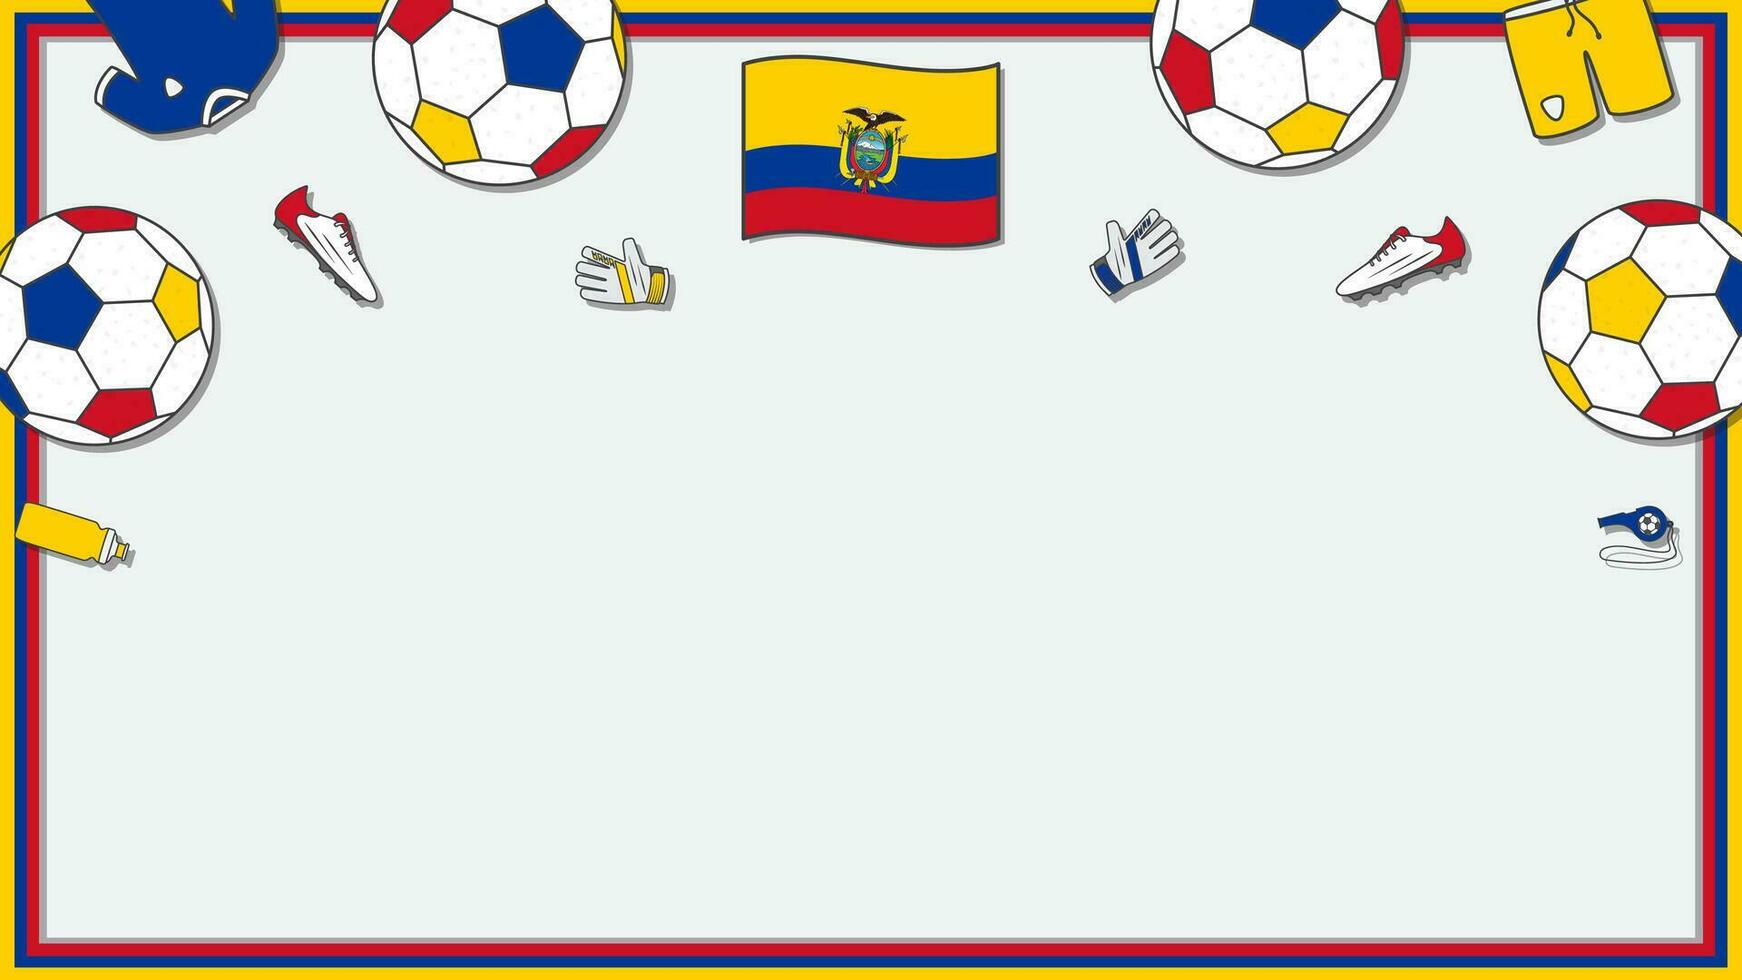 Amerikaans voetbal achtergrond ontwerp sjabloon. Amerikaans voetbal tekenfilm vector illustratie. wedstrijd in Ecuador